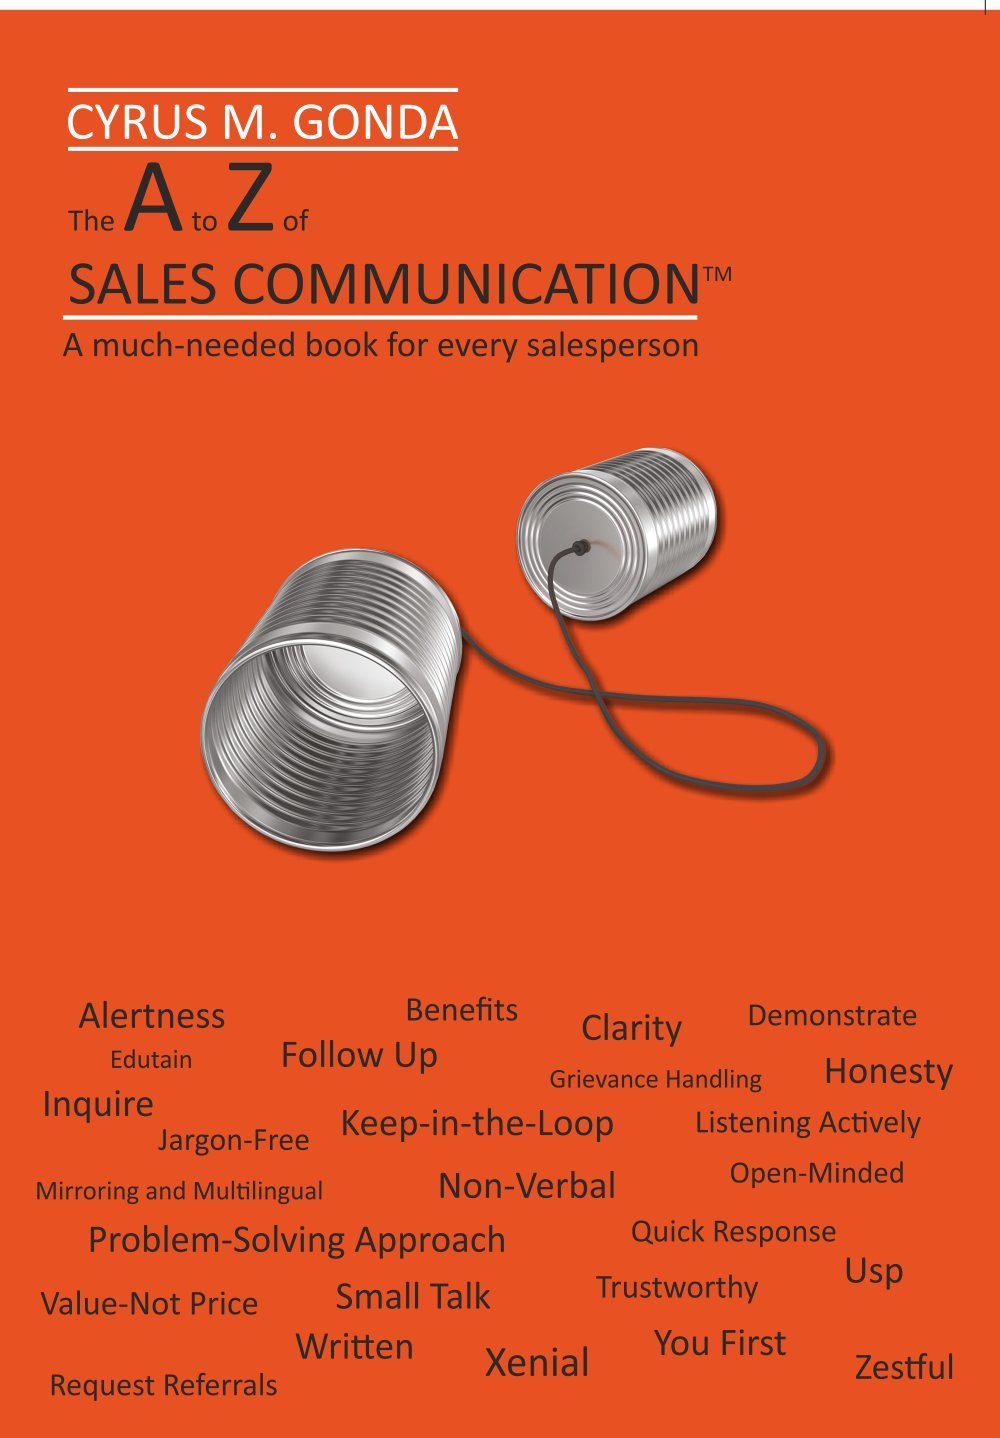 The A – Z Of Sales Communication ™